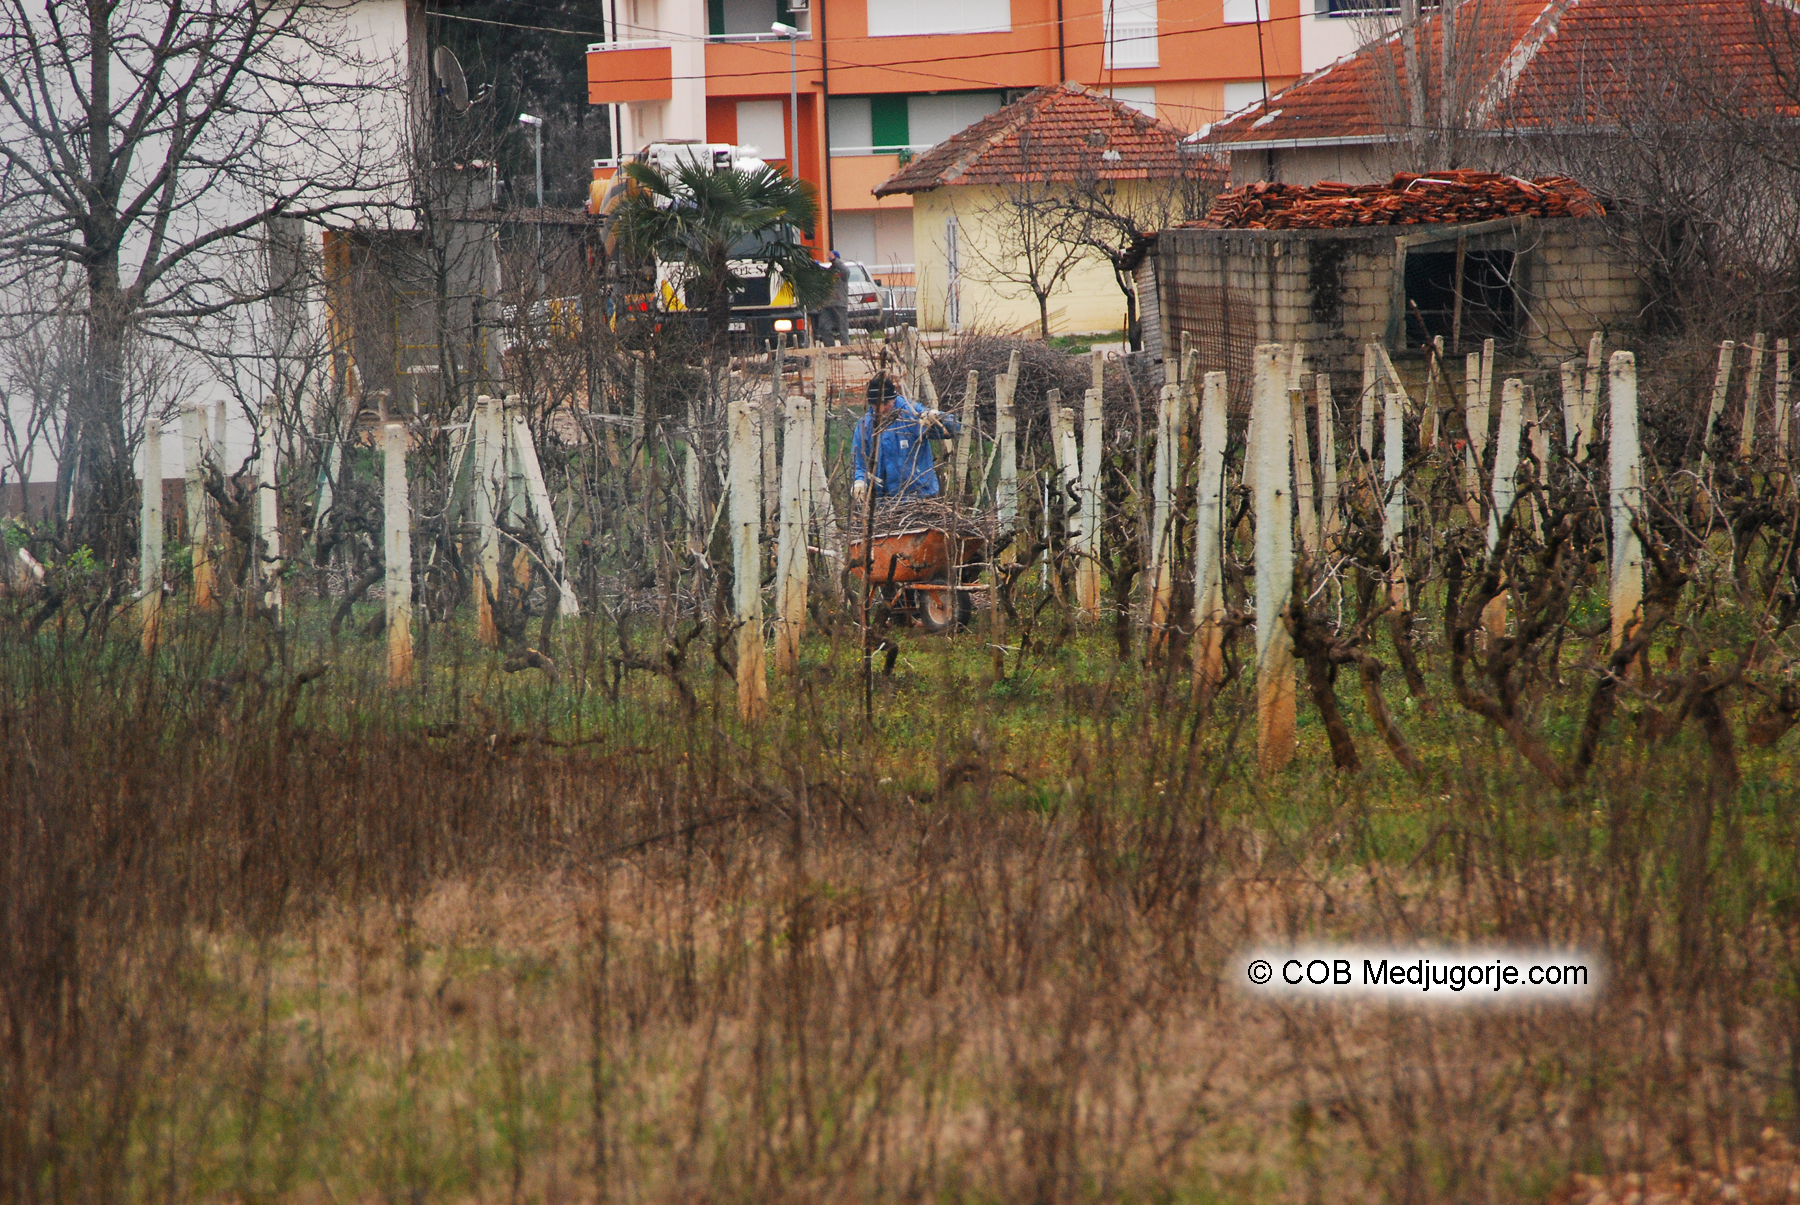 Villager working in the vineyard